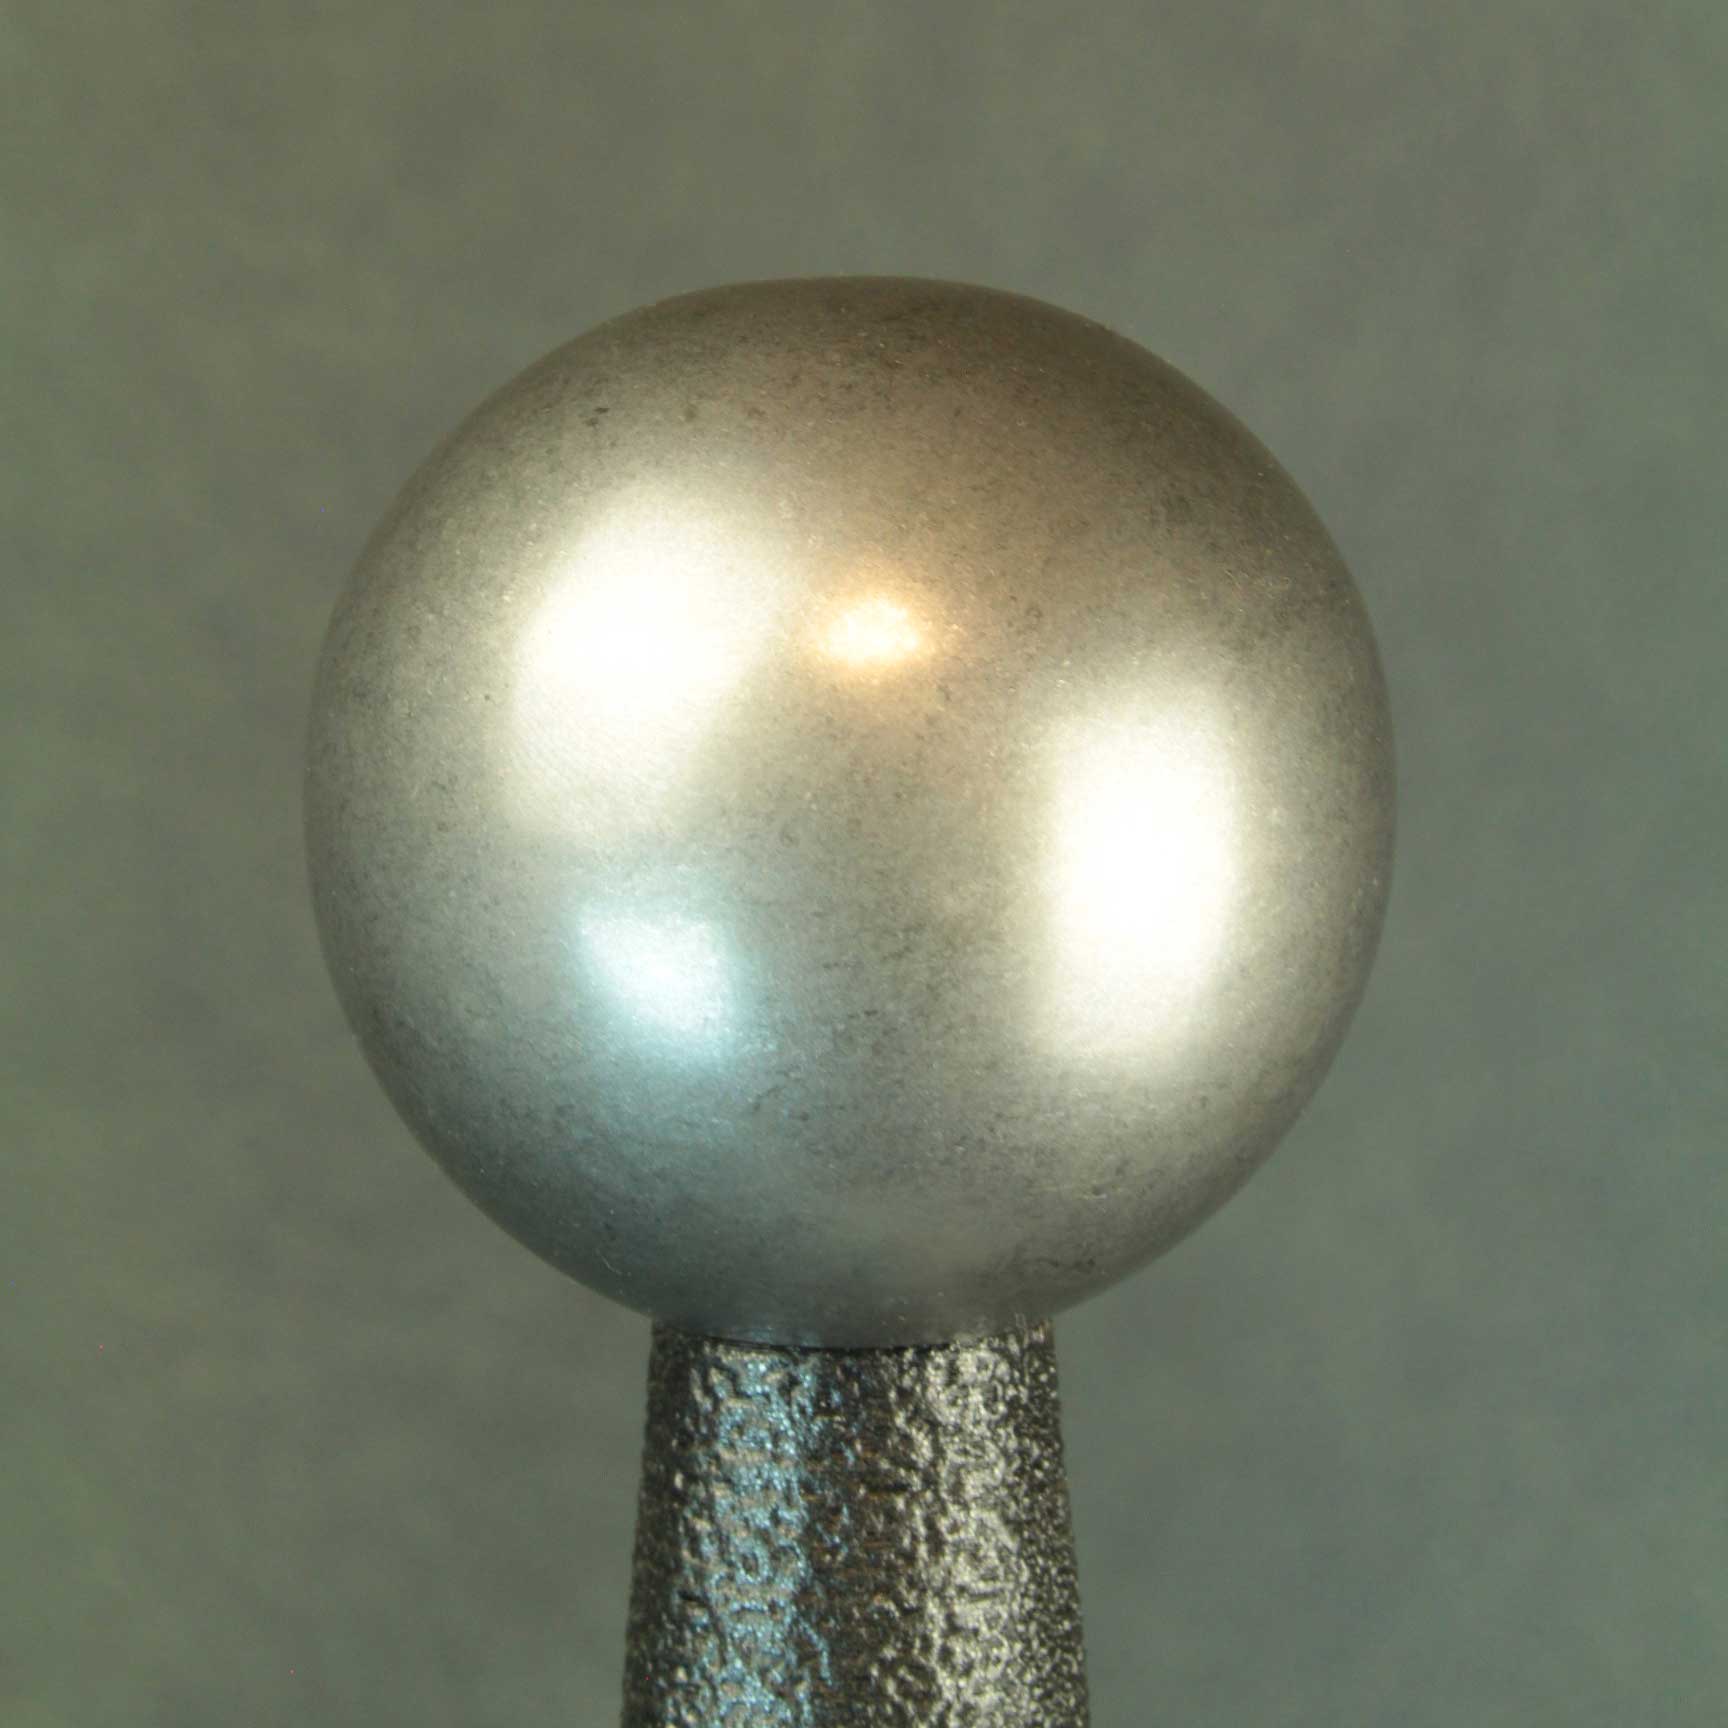 Large Ball Profile Pommel